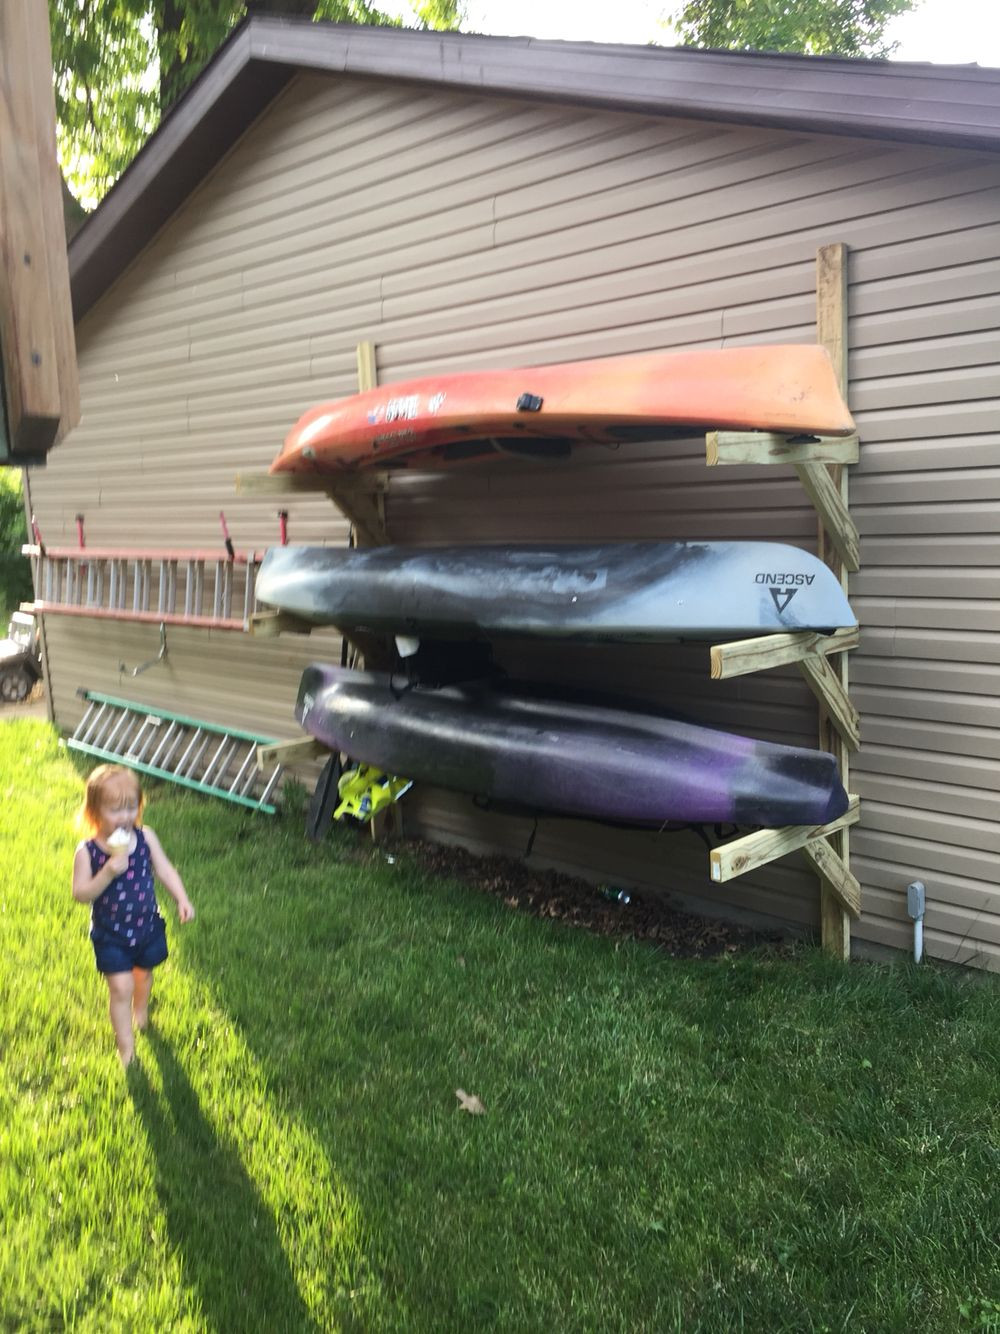 Diy Kayak Storage Rack My Ledge